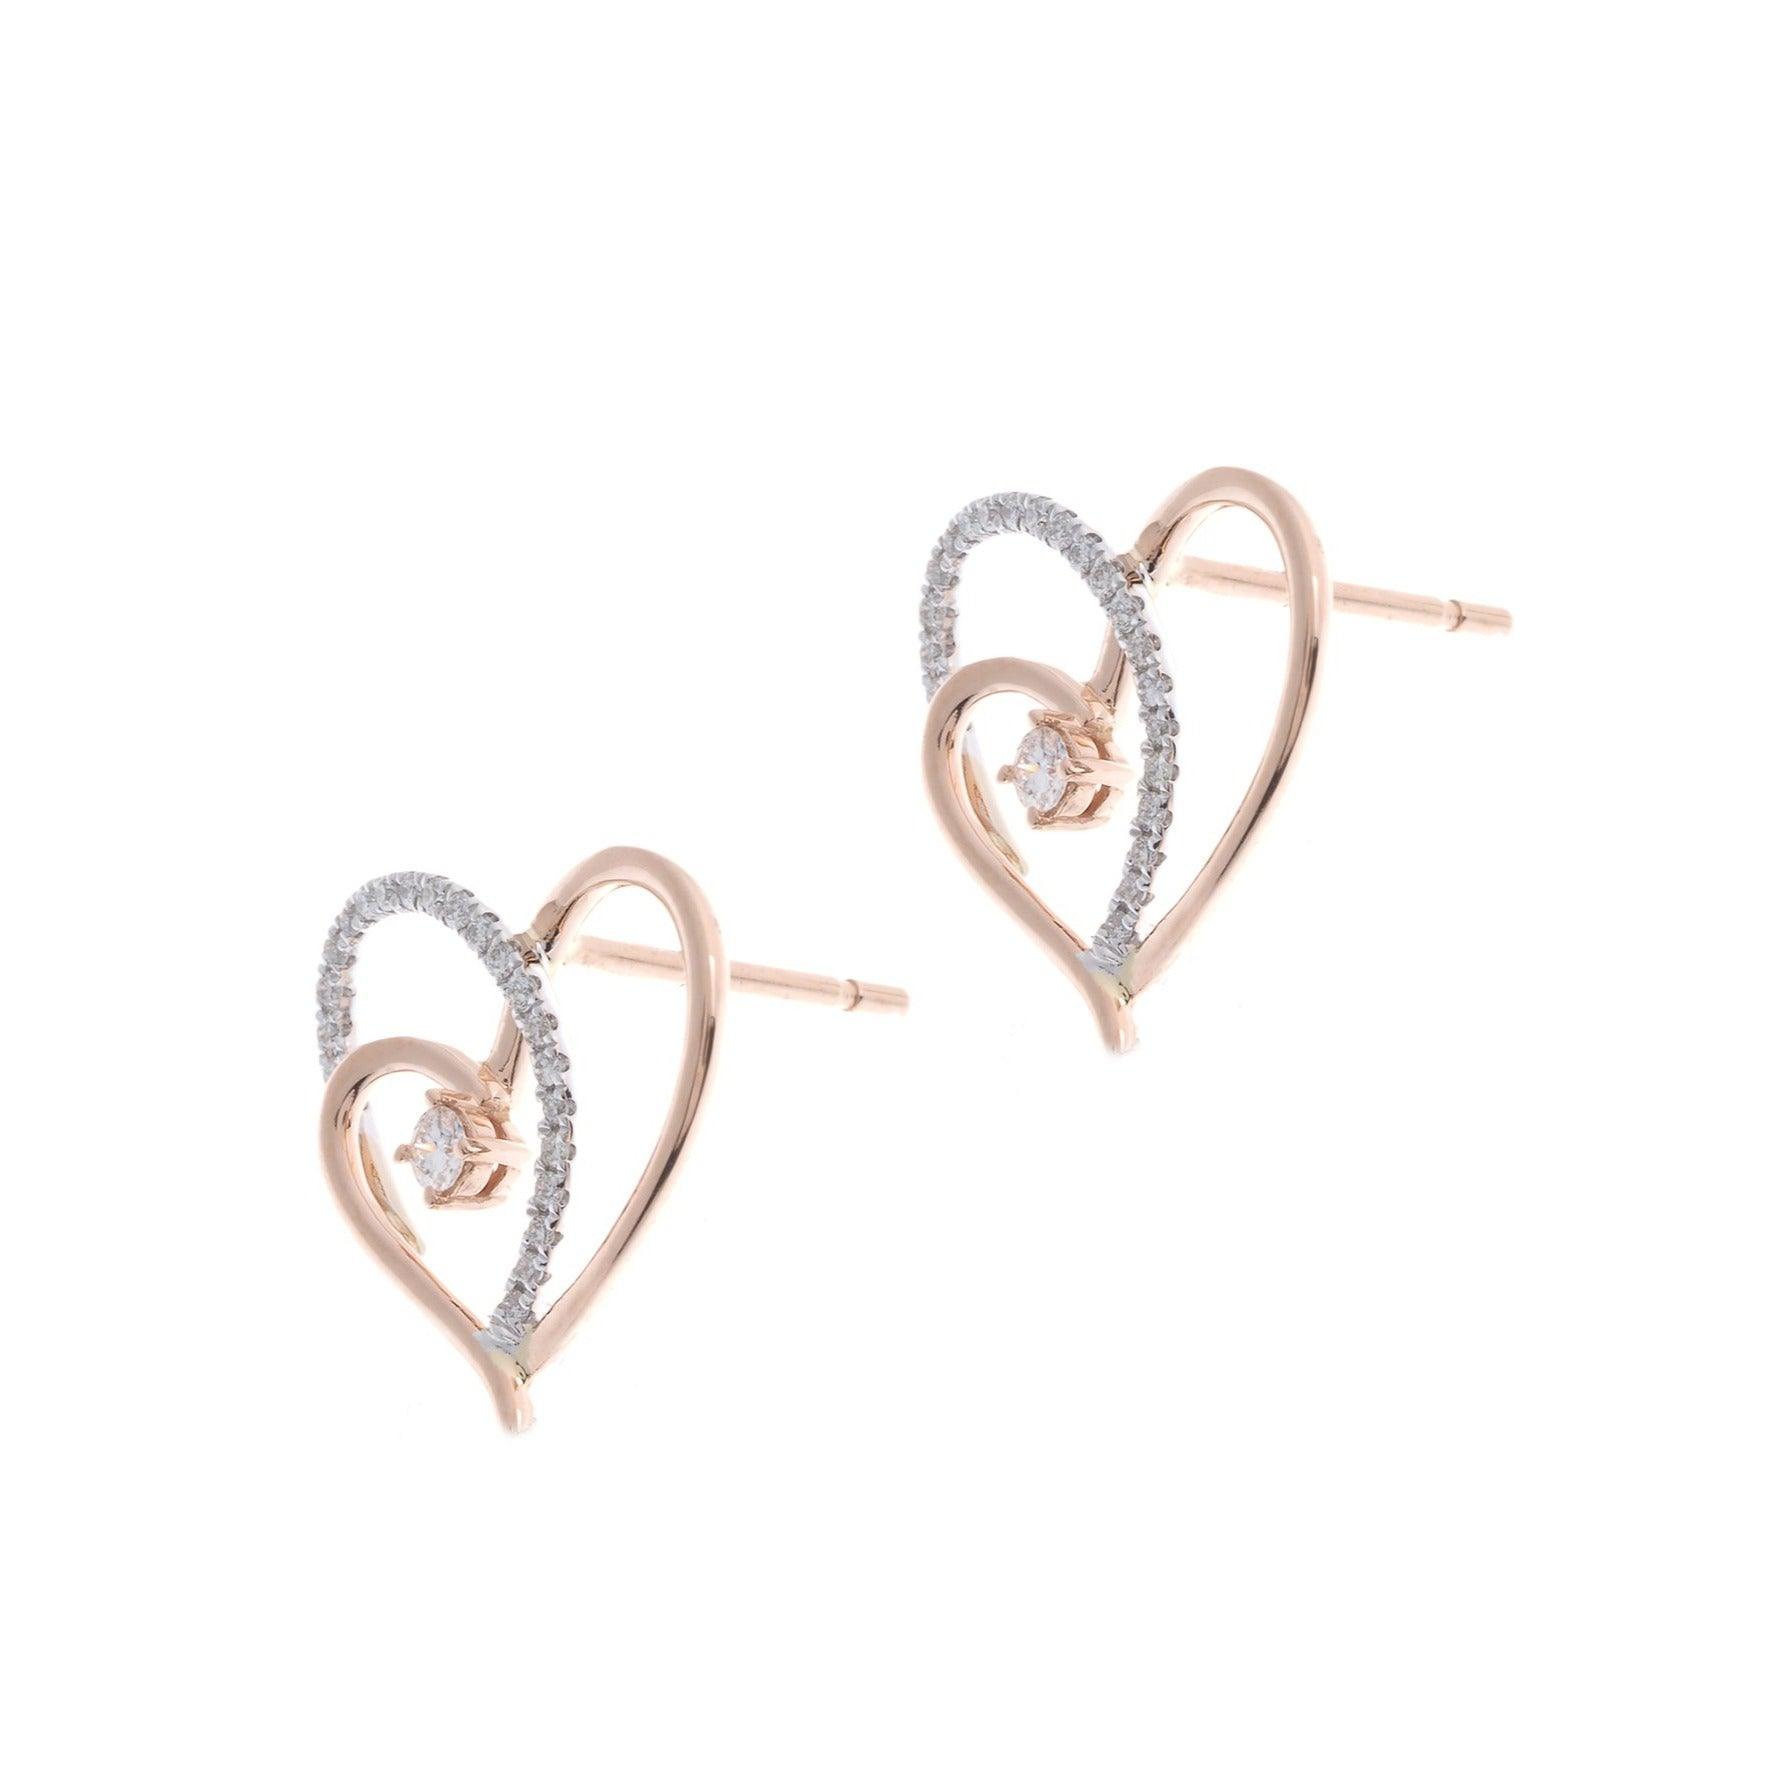 18ct Rose and White Gold Diamond Heart Design Earrings with push backs E43265-1